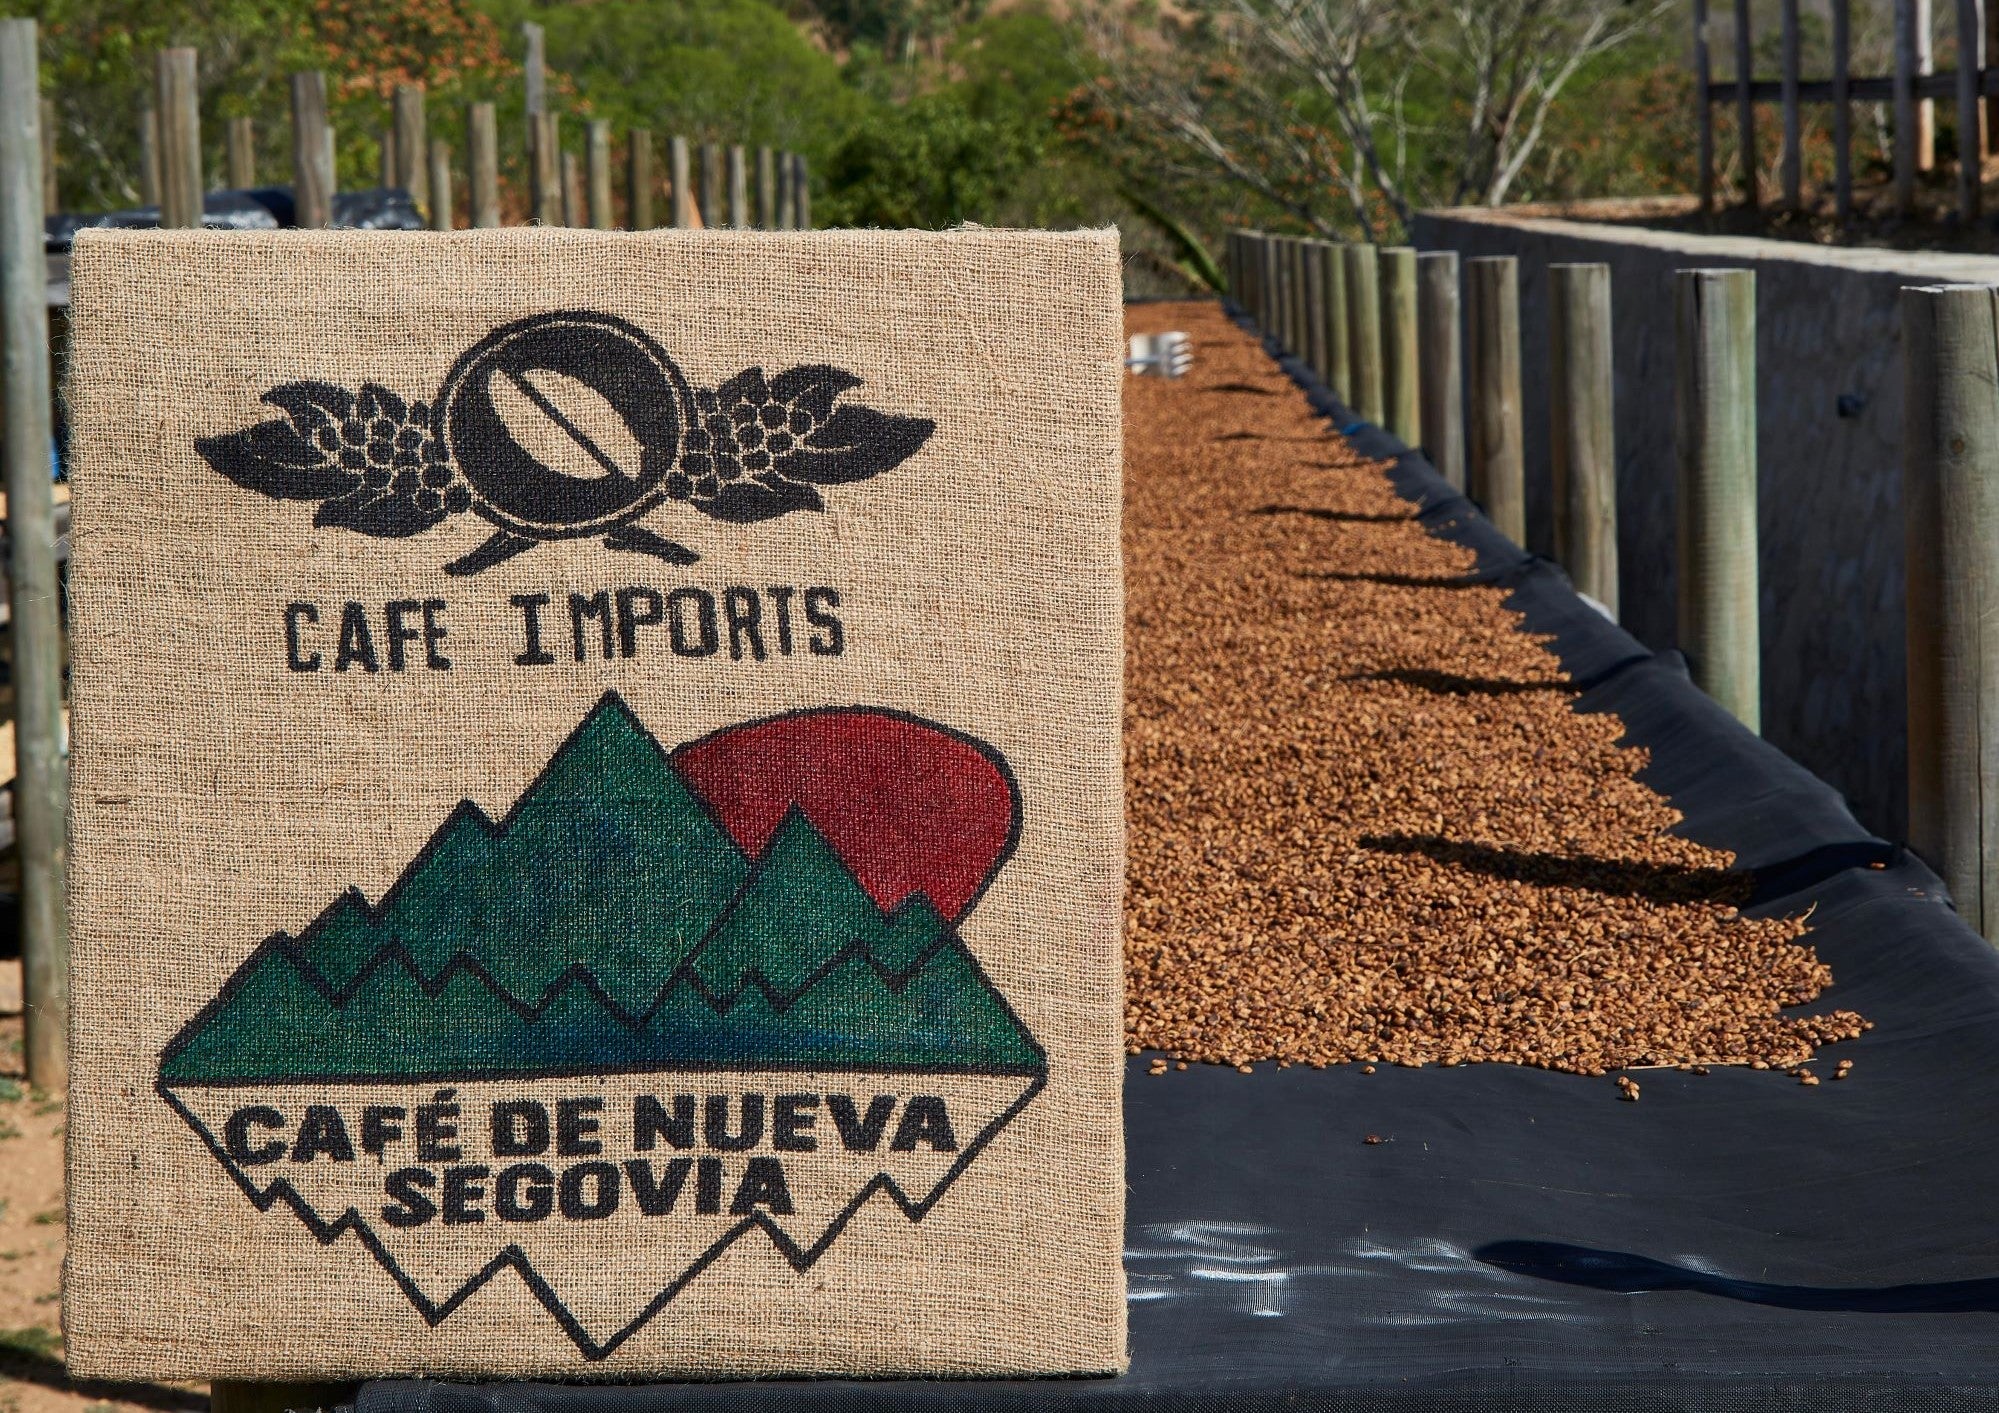 Cafetos De Segovia, NIcaragua coffee farm, coffee sack and drying coffee beds